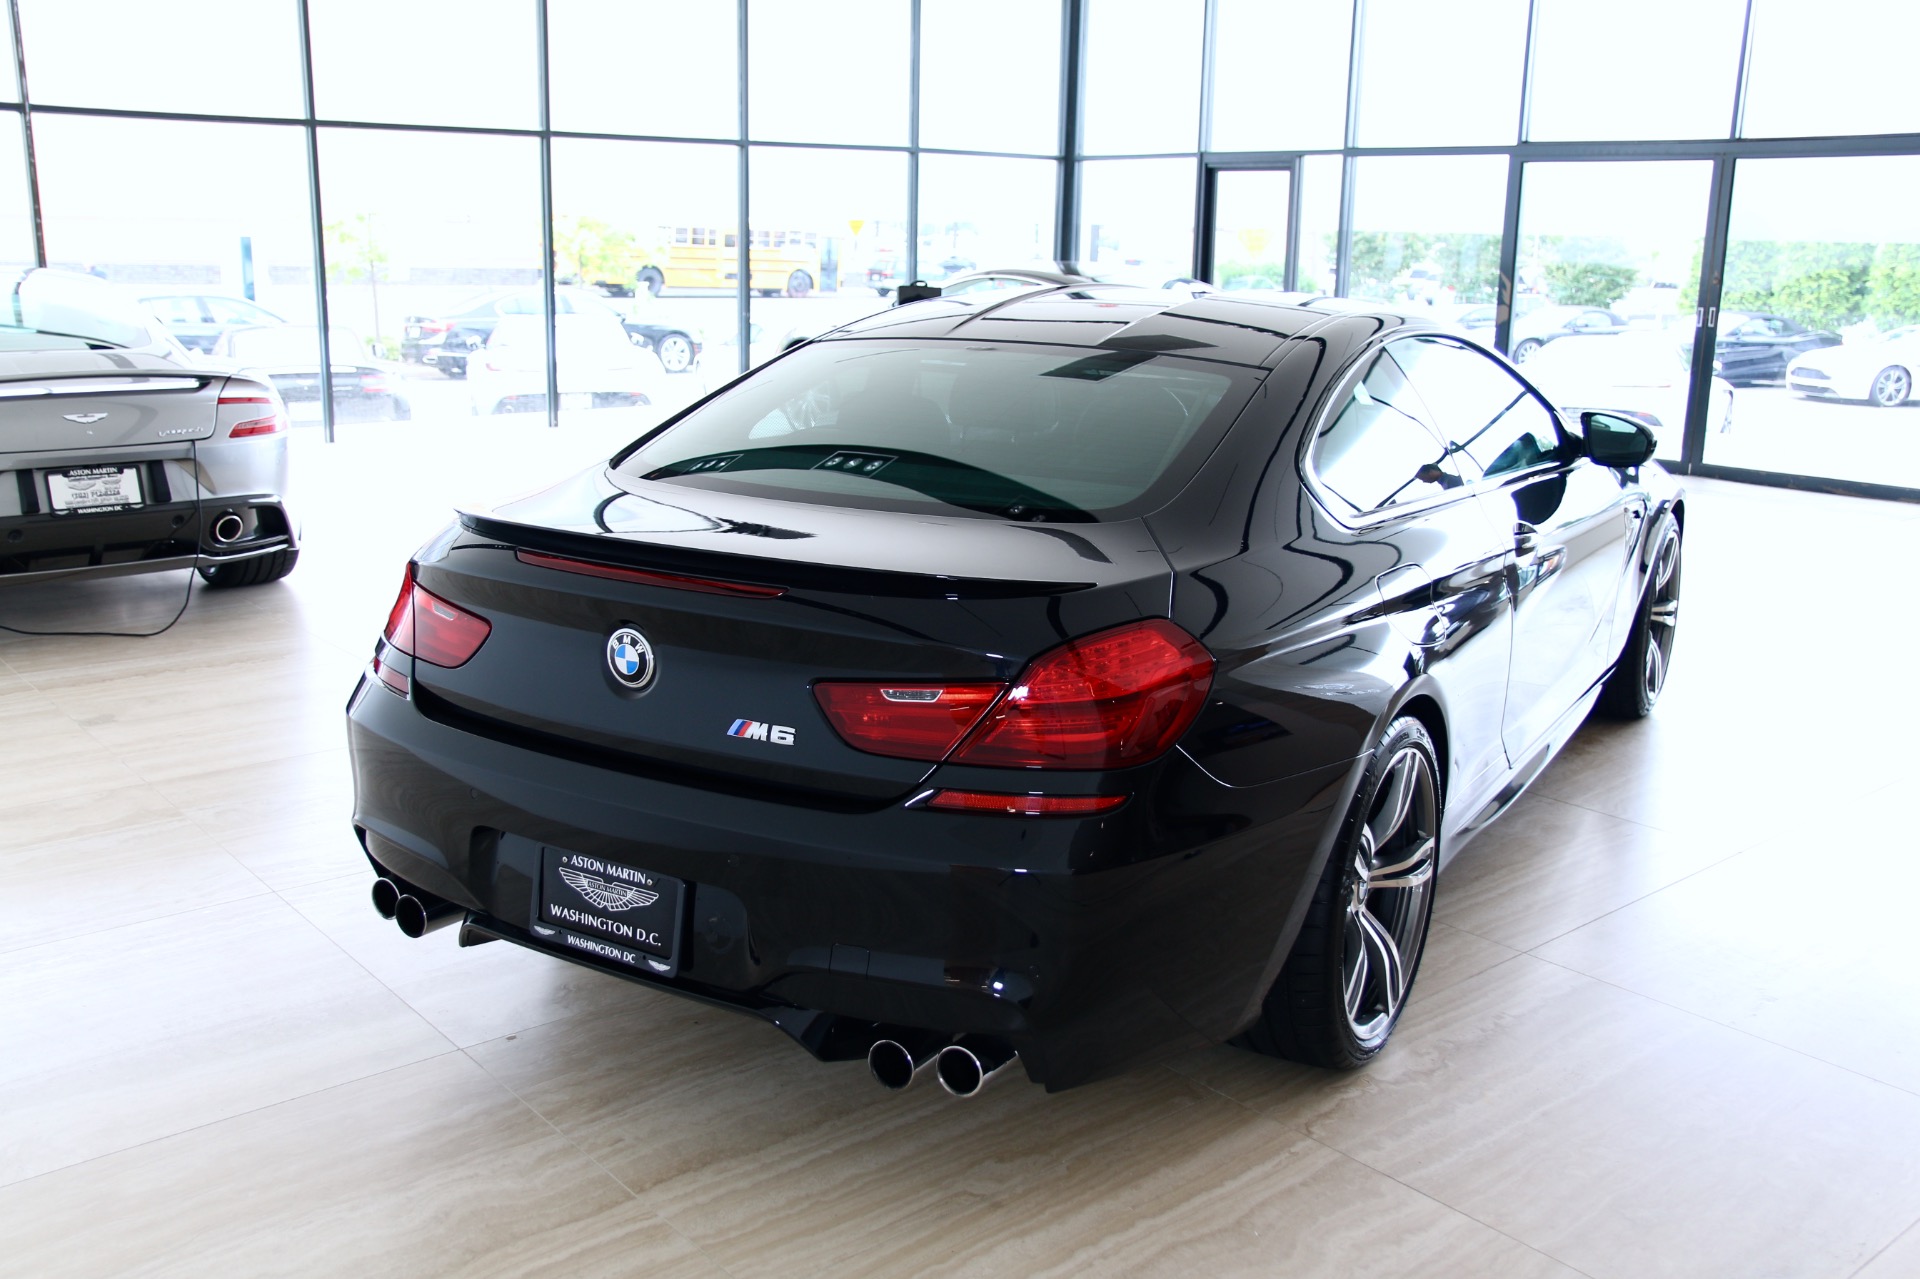 2013 BMW M6 Stock # 6N051495B for sale near Vienna, VA | VA BMW Dealer